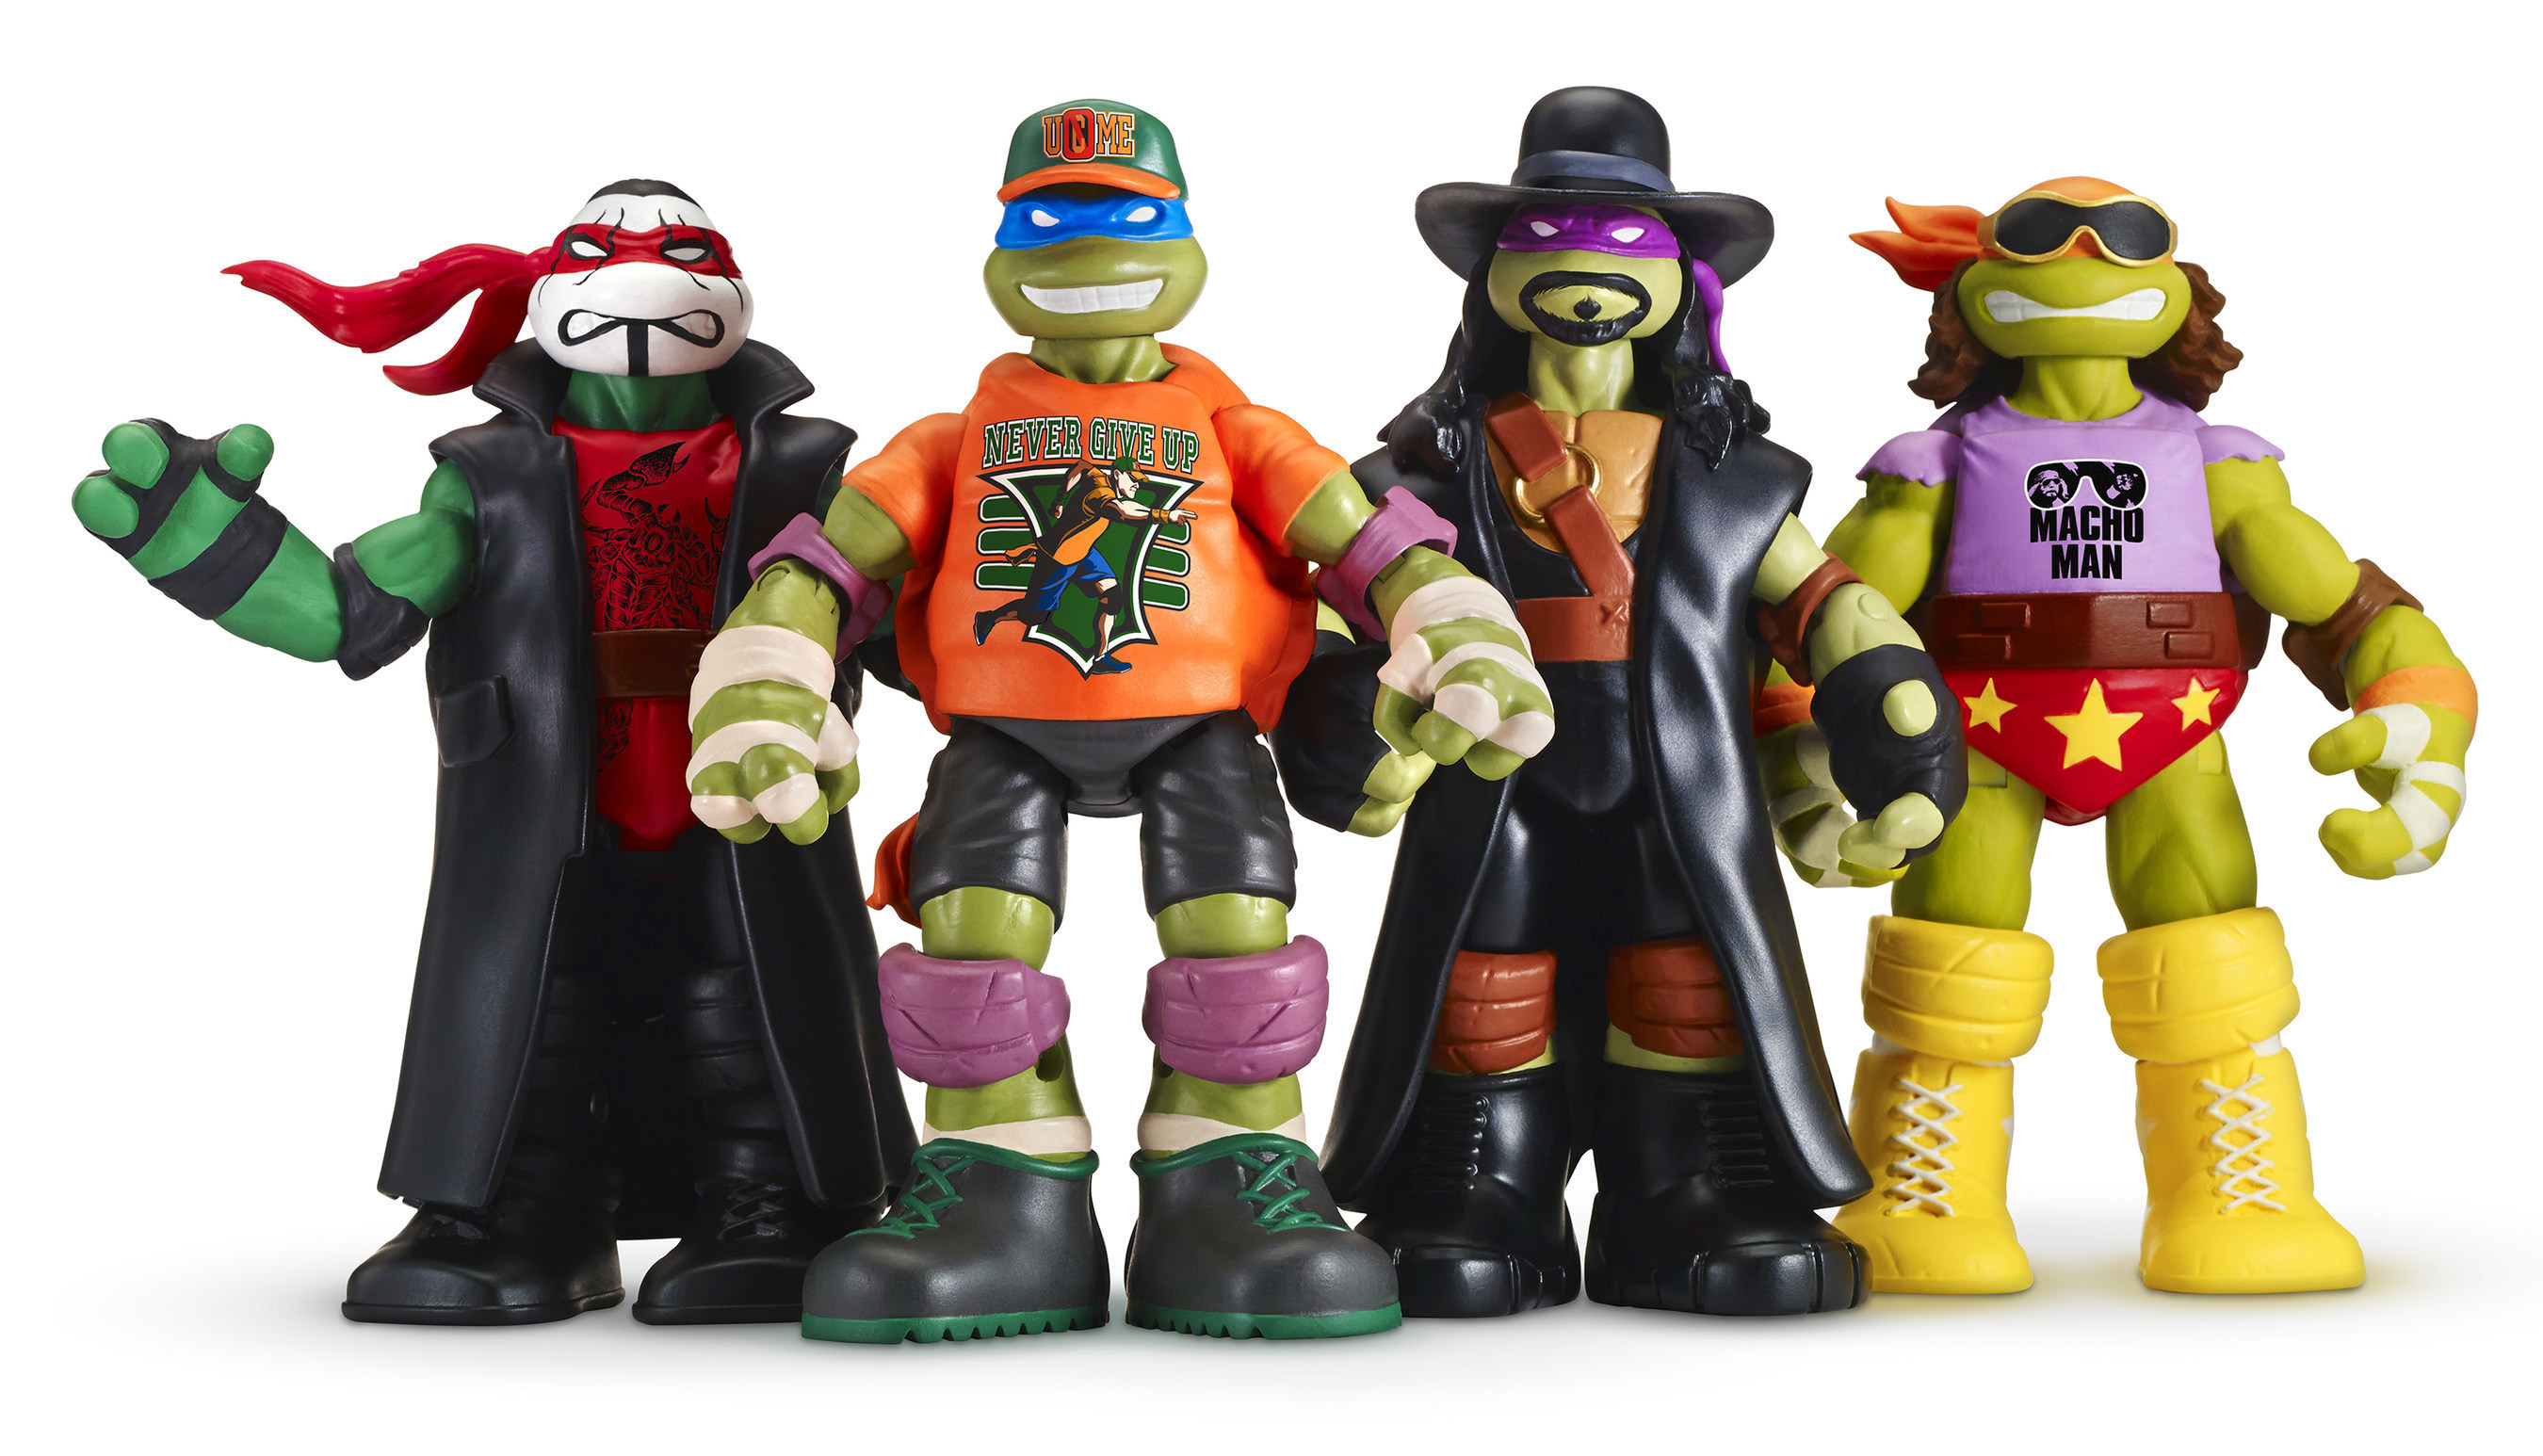 Ninja Turtle Figurines At Walmart Shop, 57% OFF | www 